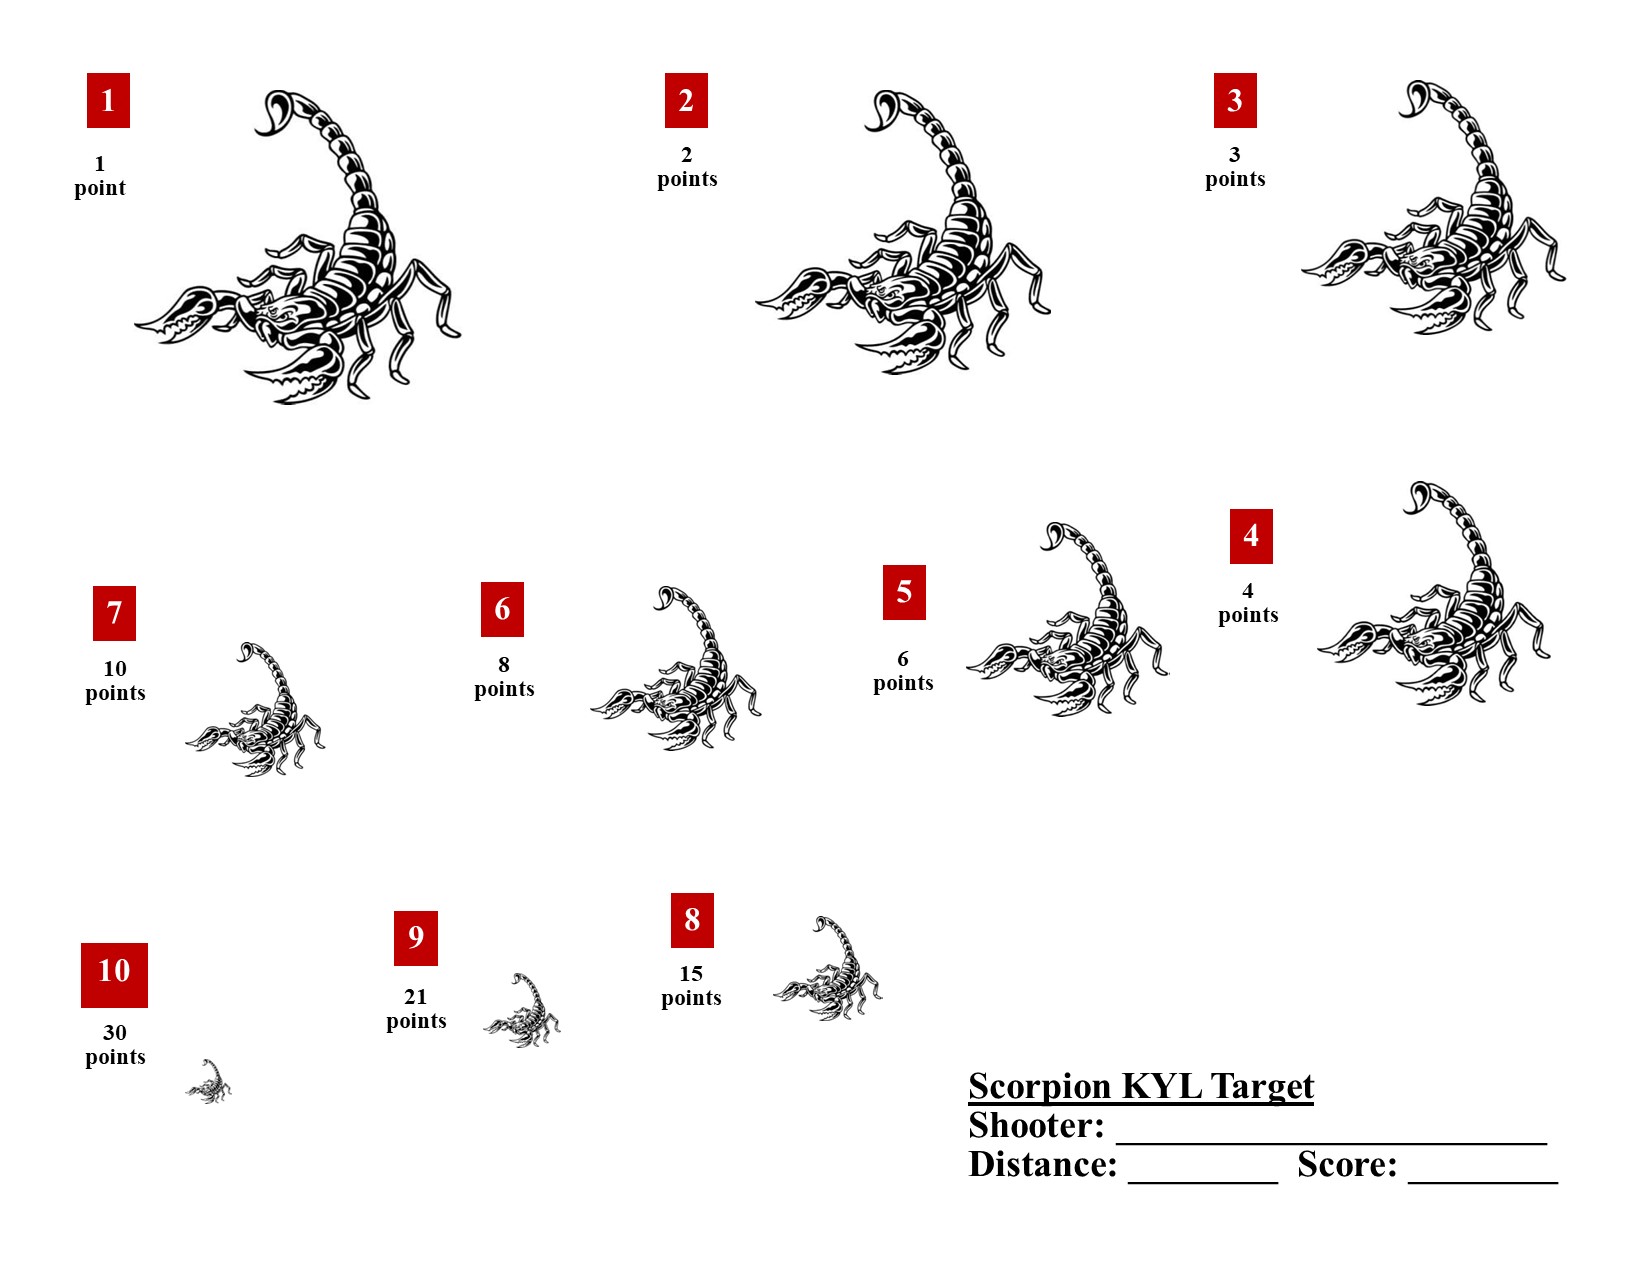 Scorpion KYL Target 1.jpg